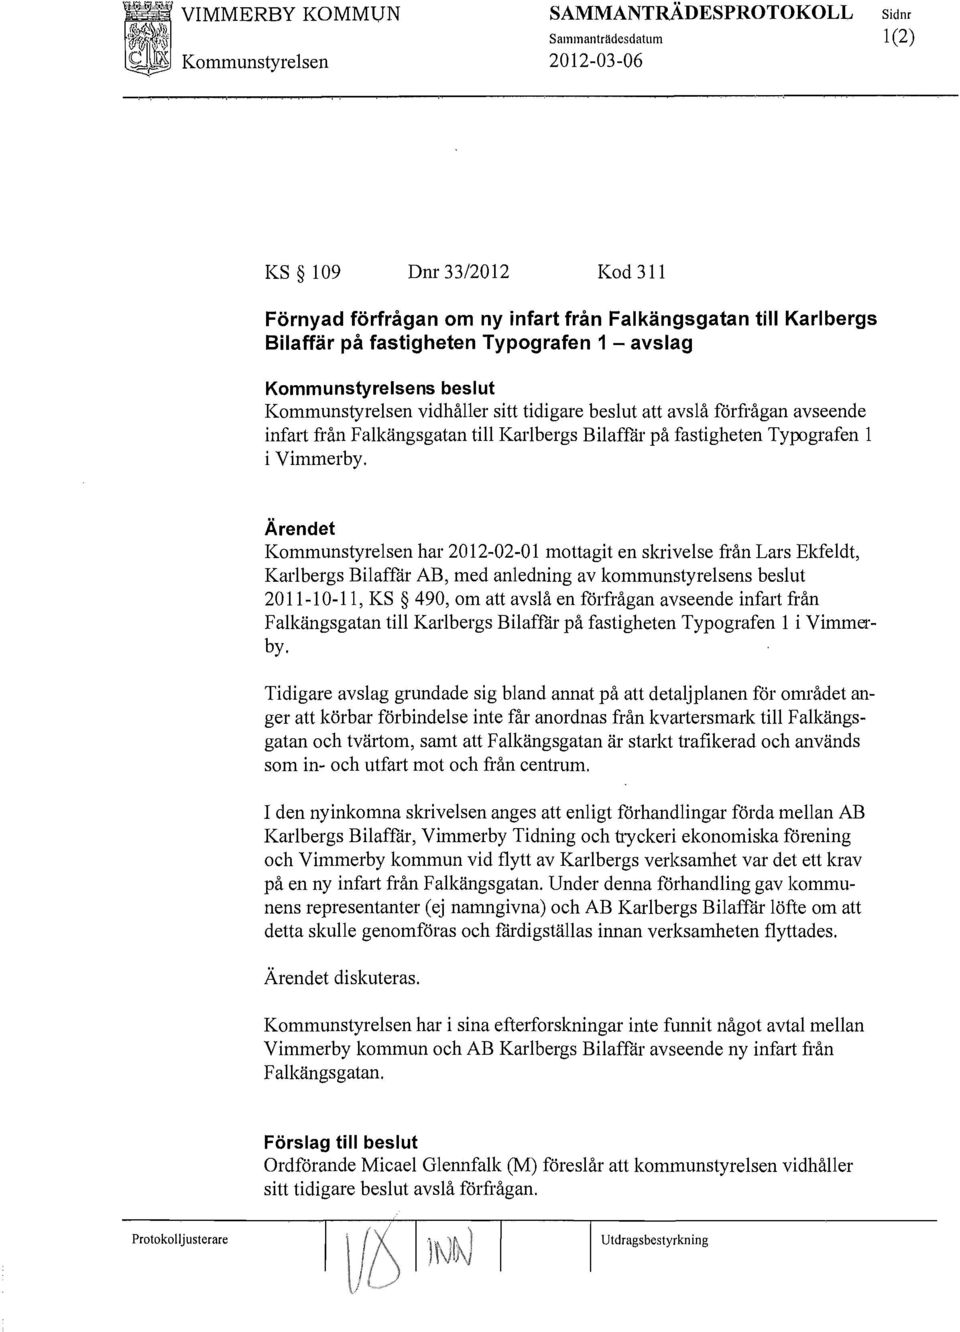 Kommunstyrelsen har 2012-02-01 mottagit en skrivelse från Lars Ekfeldt, Karlbergs Bilaffår AB, med anledning av kommunstyrelsens beslut 2011-10-11, KS 490, om att avslå en förfrågan avseende infart